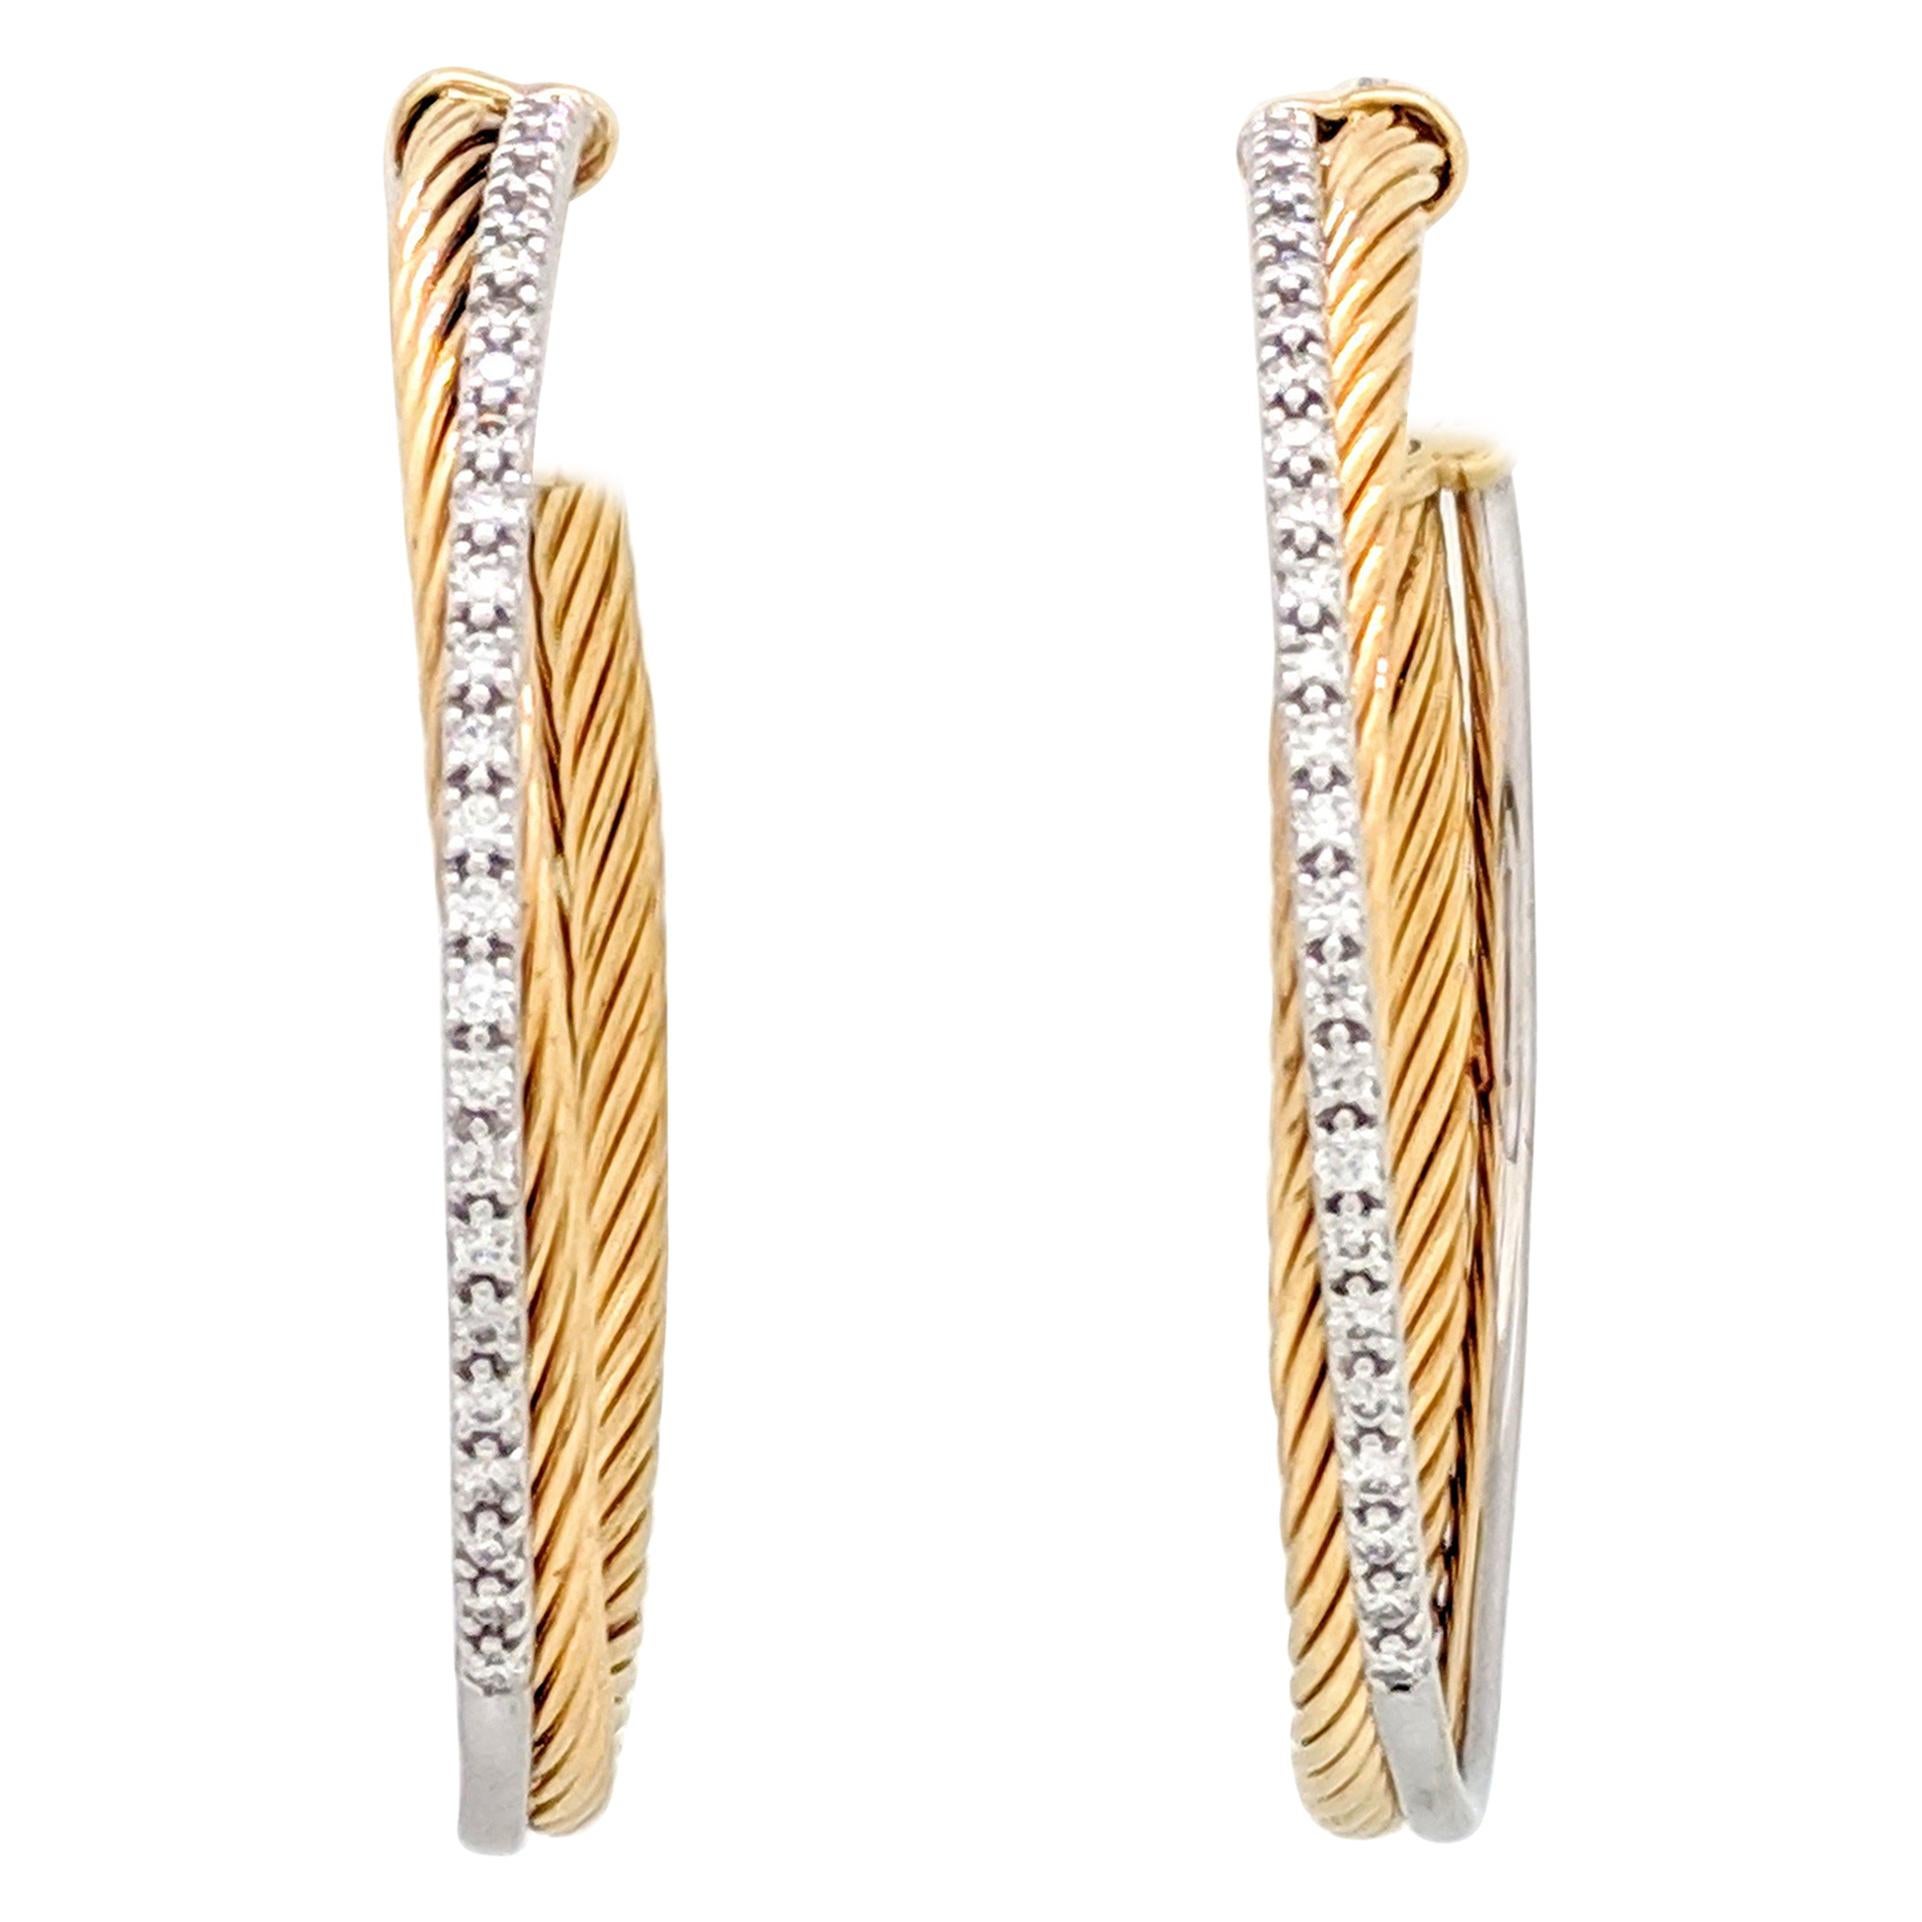 David Yurman Crossover Extra Large Hoop Earrings w/ Diamonds in 18k 2-Tone Gold